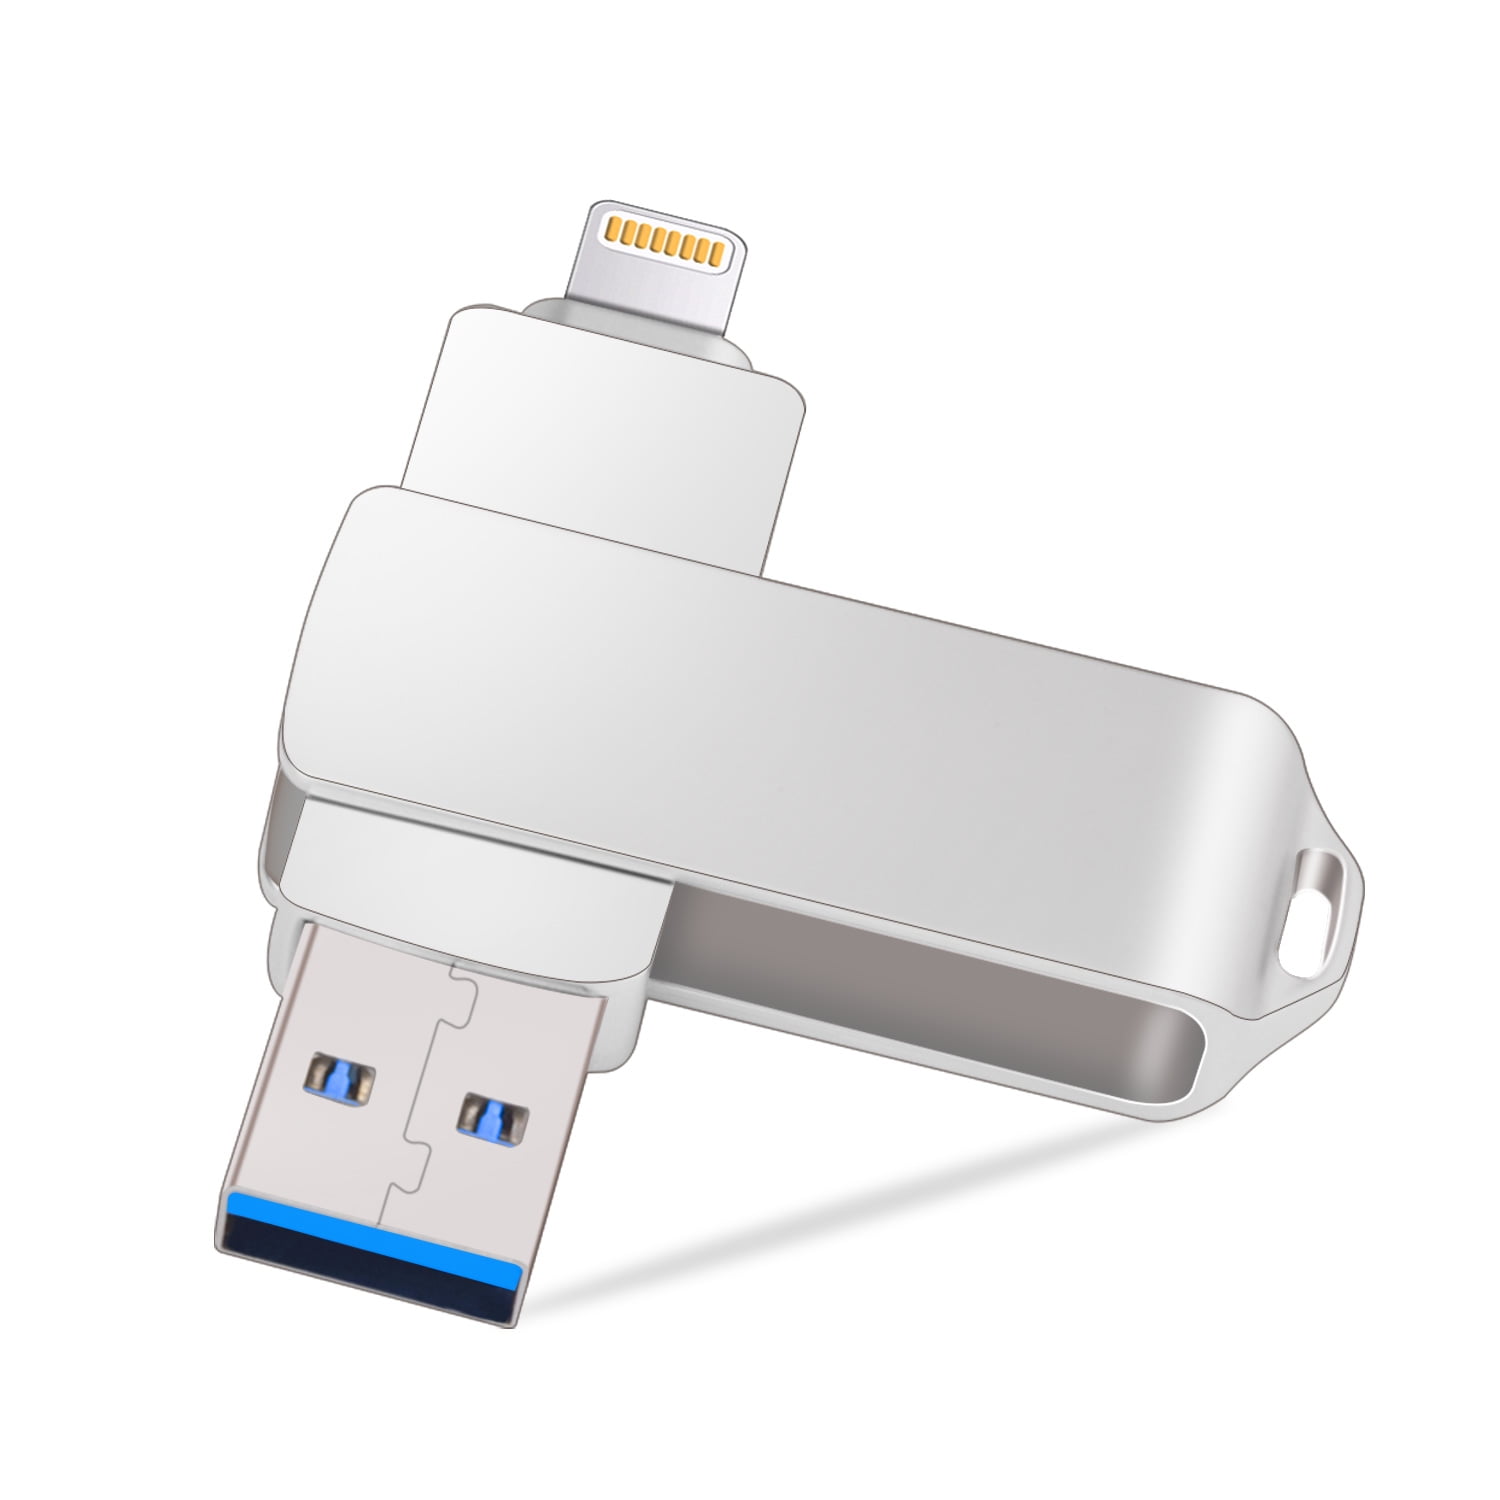 Kootion 32GB USB Flash Drive for iPhone USB USB 3-In-1 Metal Thumb Drive 3.0 Jump Drives USB Memory Stick Storage for iOS iPhone iPad MacBook PC, Silver -